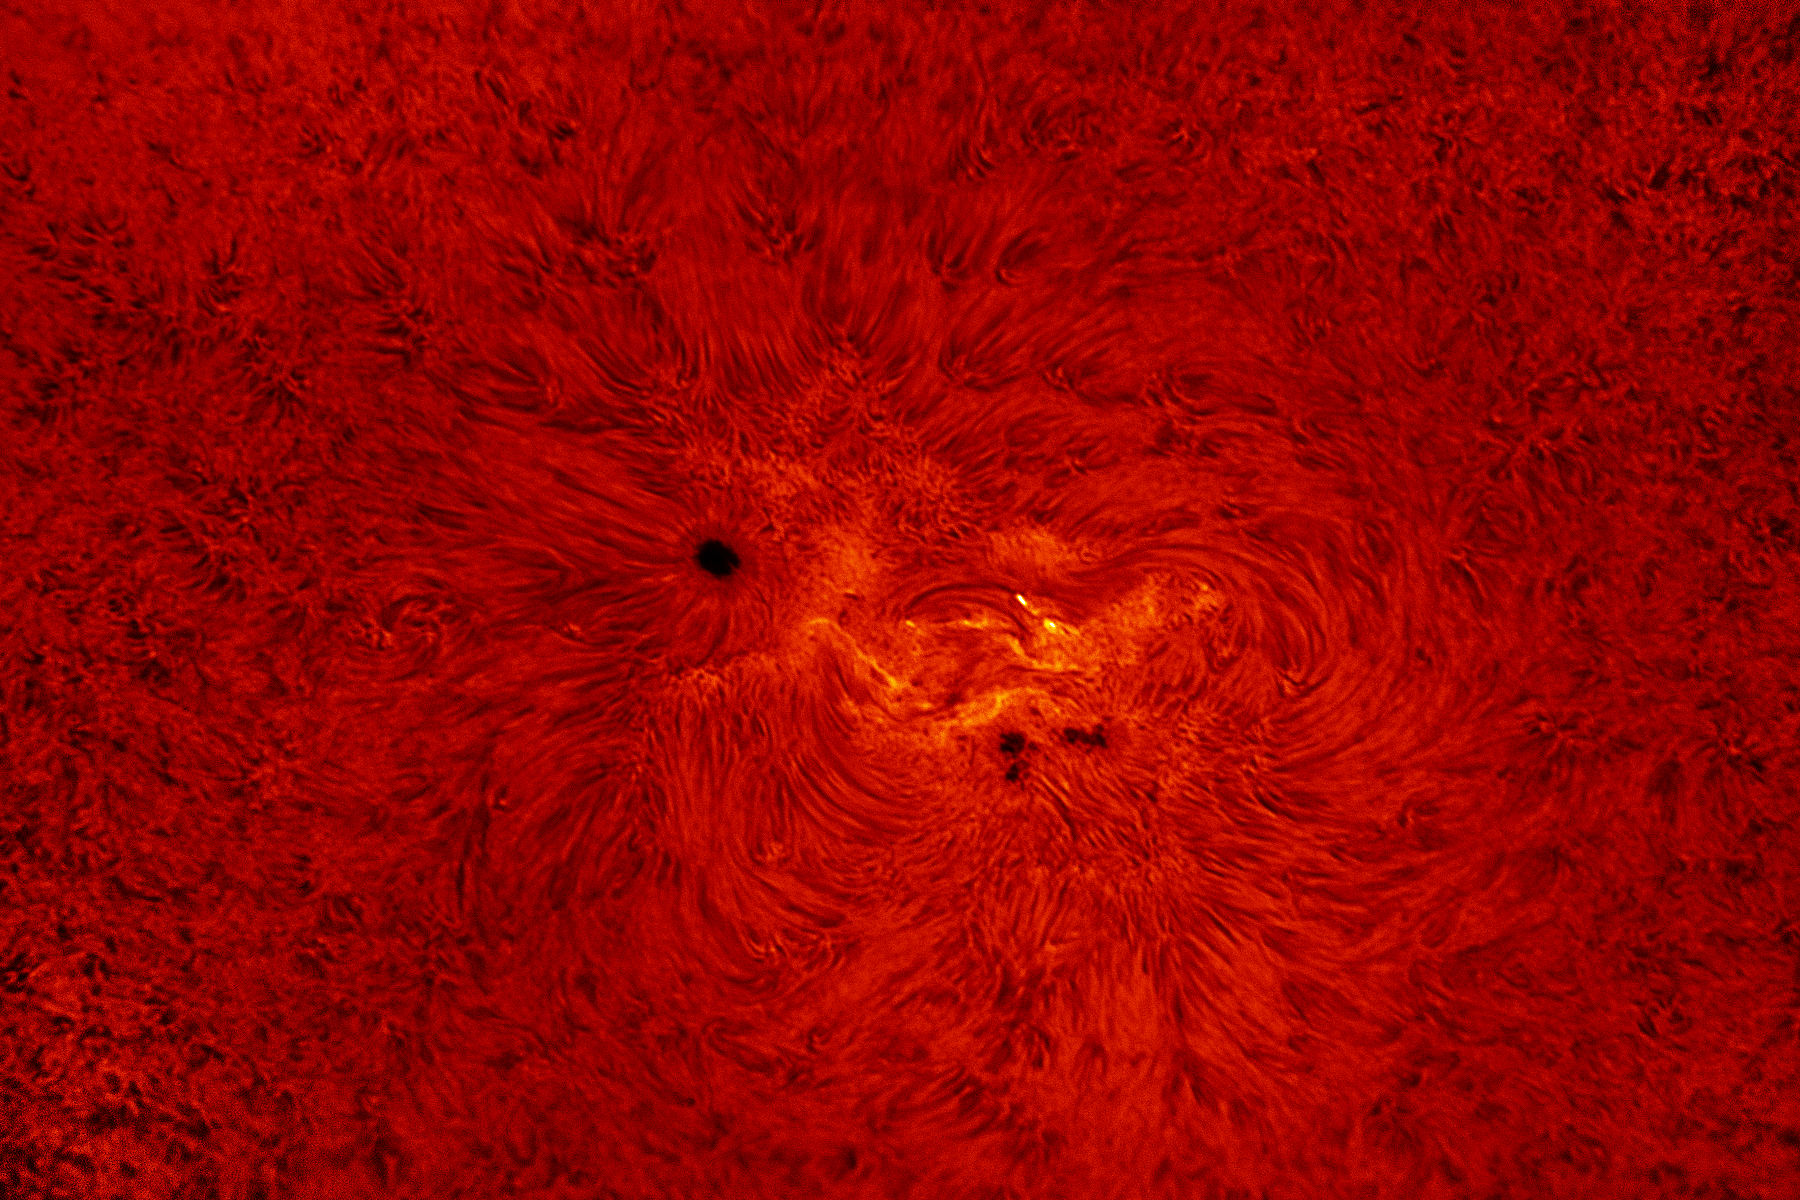 Sun H-alpha  2020-11-08 12:11